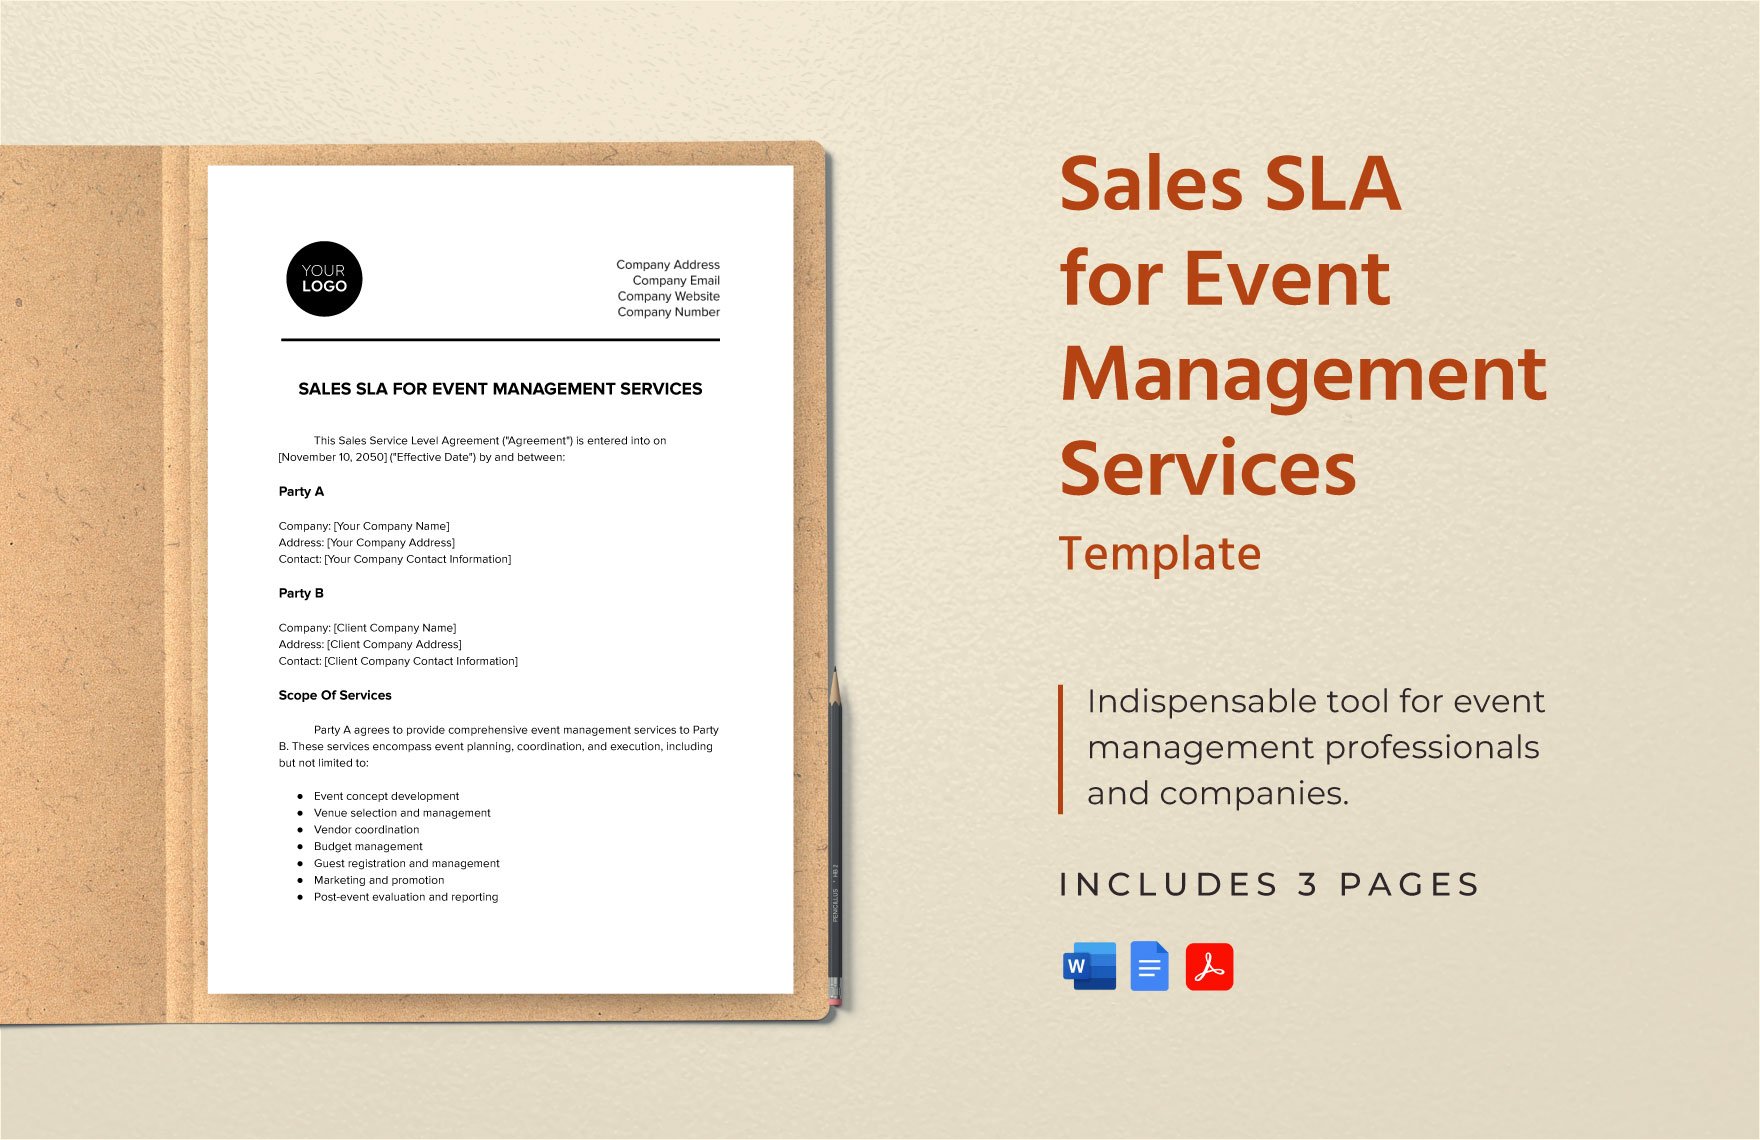 Sales SLA for Event Management Services Template